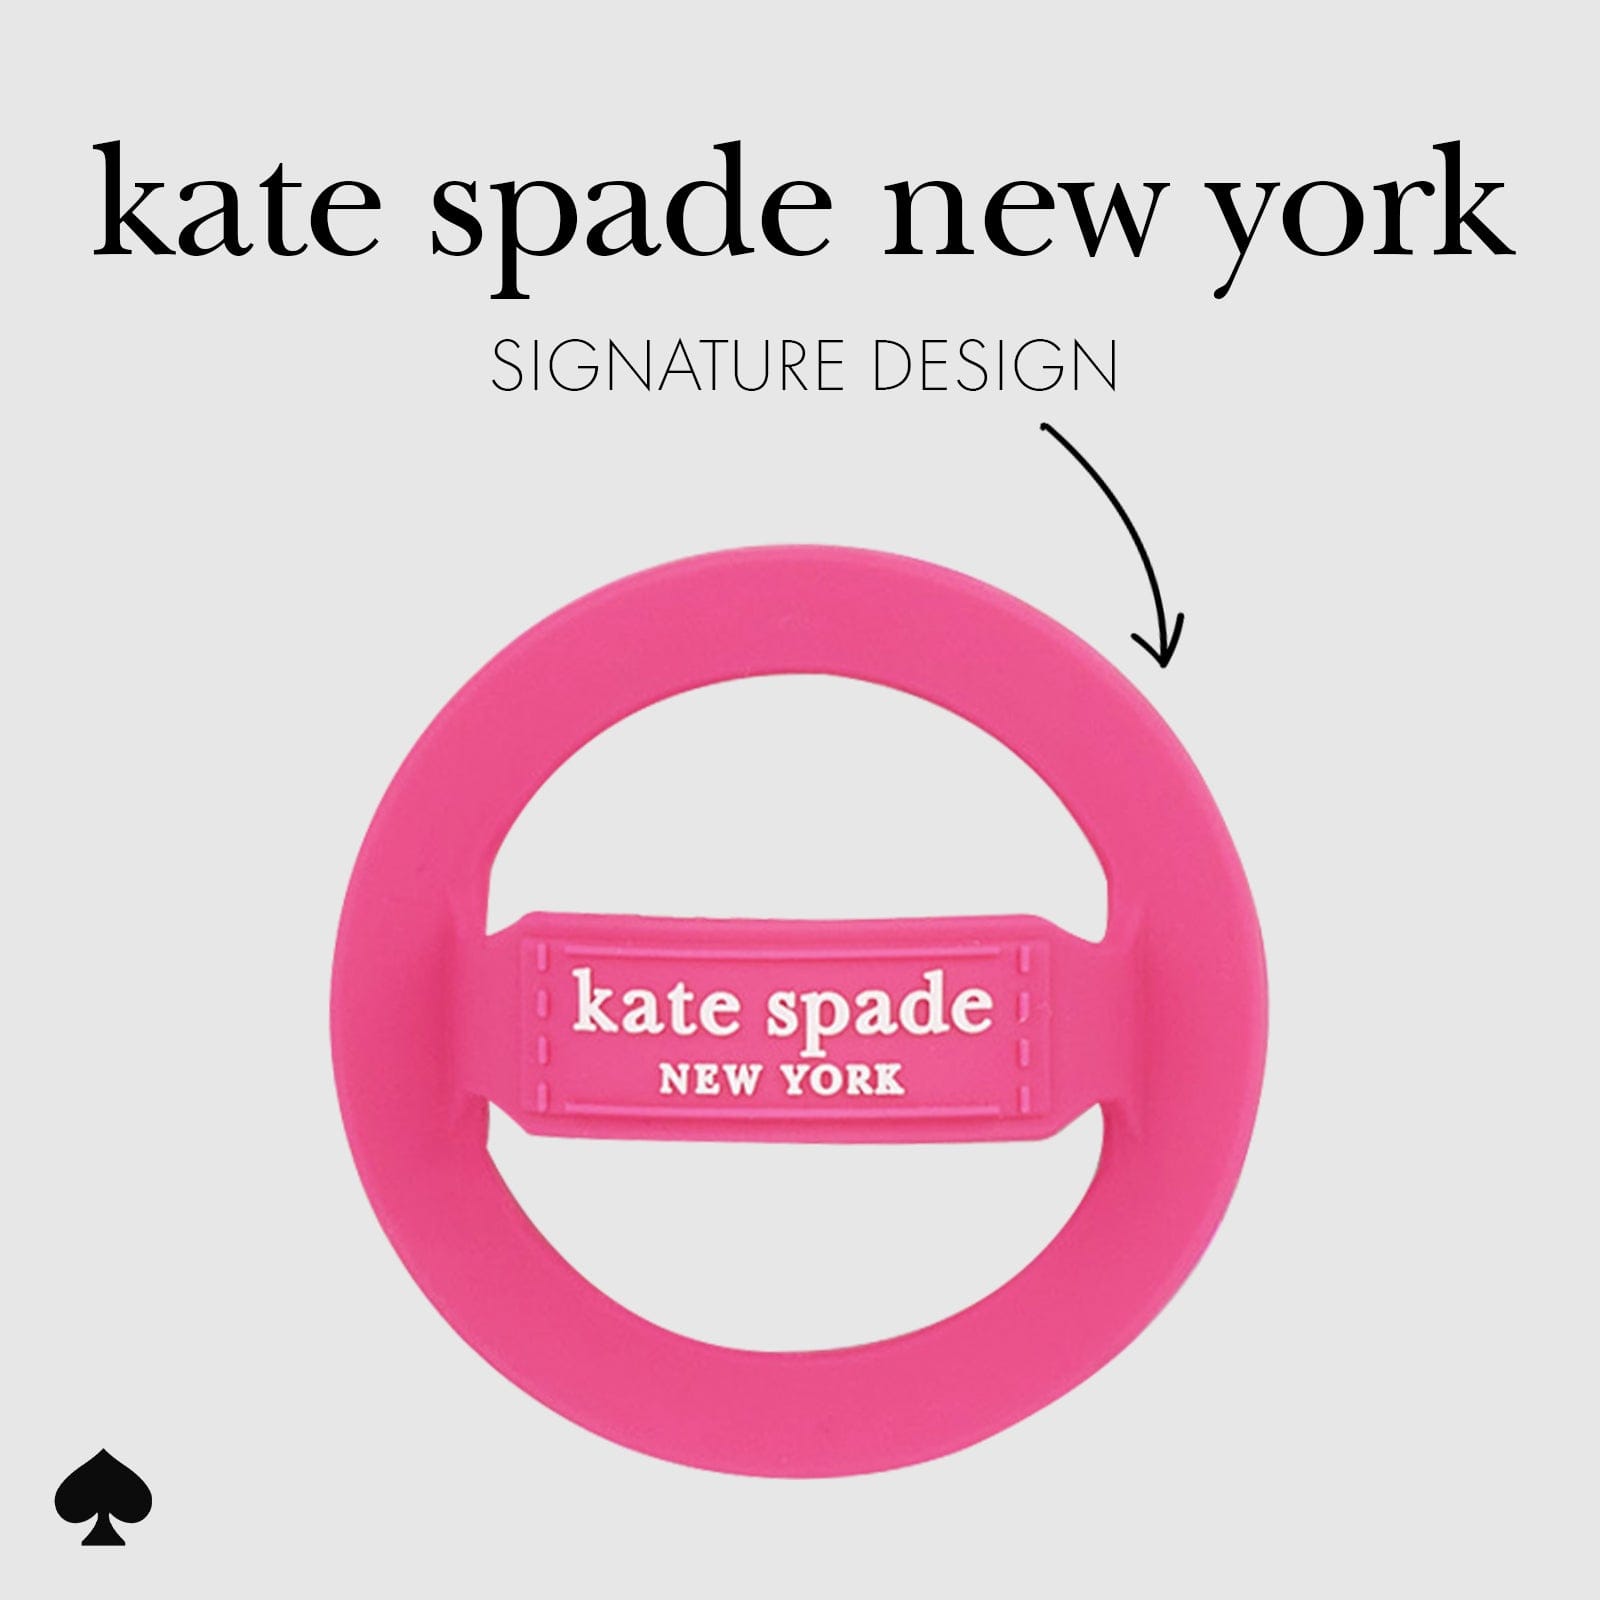 KATE SPADE NEW YORK SIGNATURE DESIGN